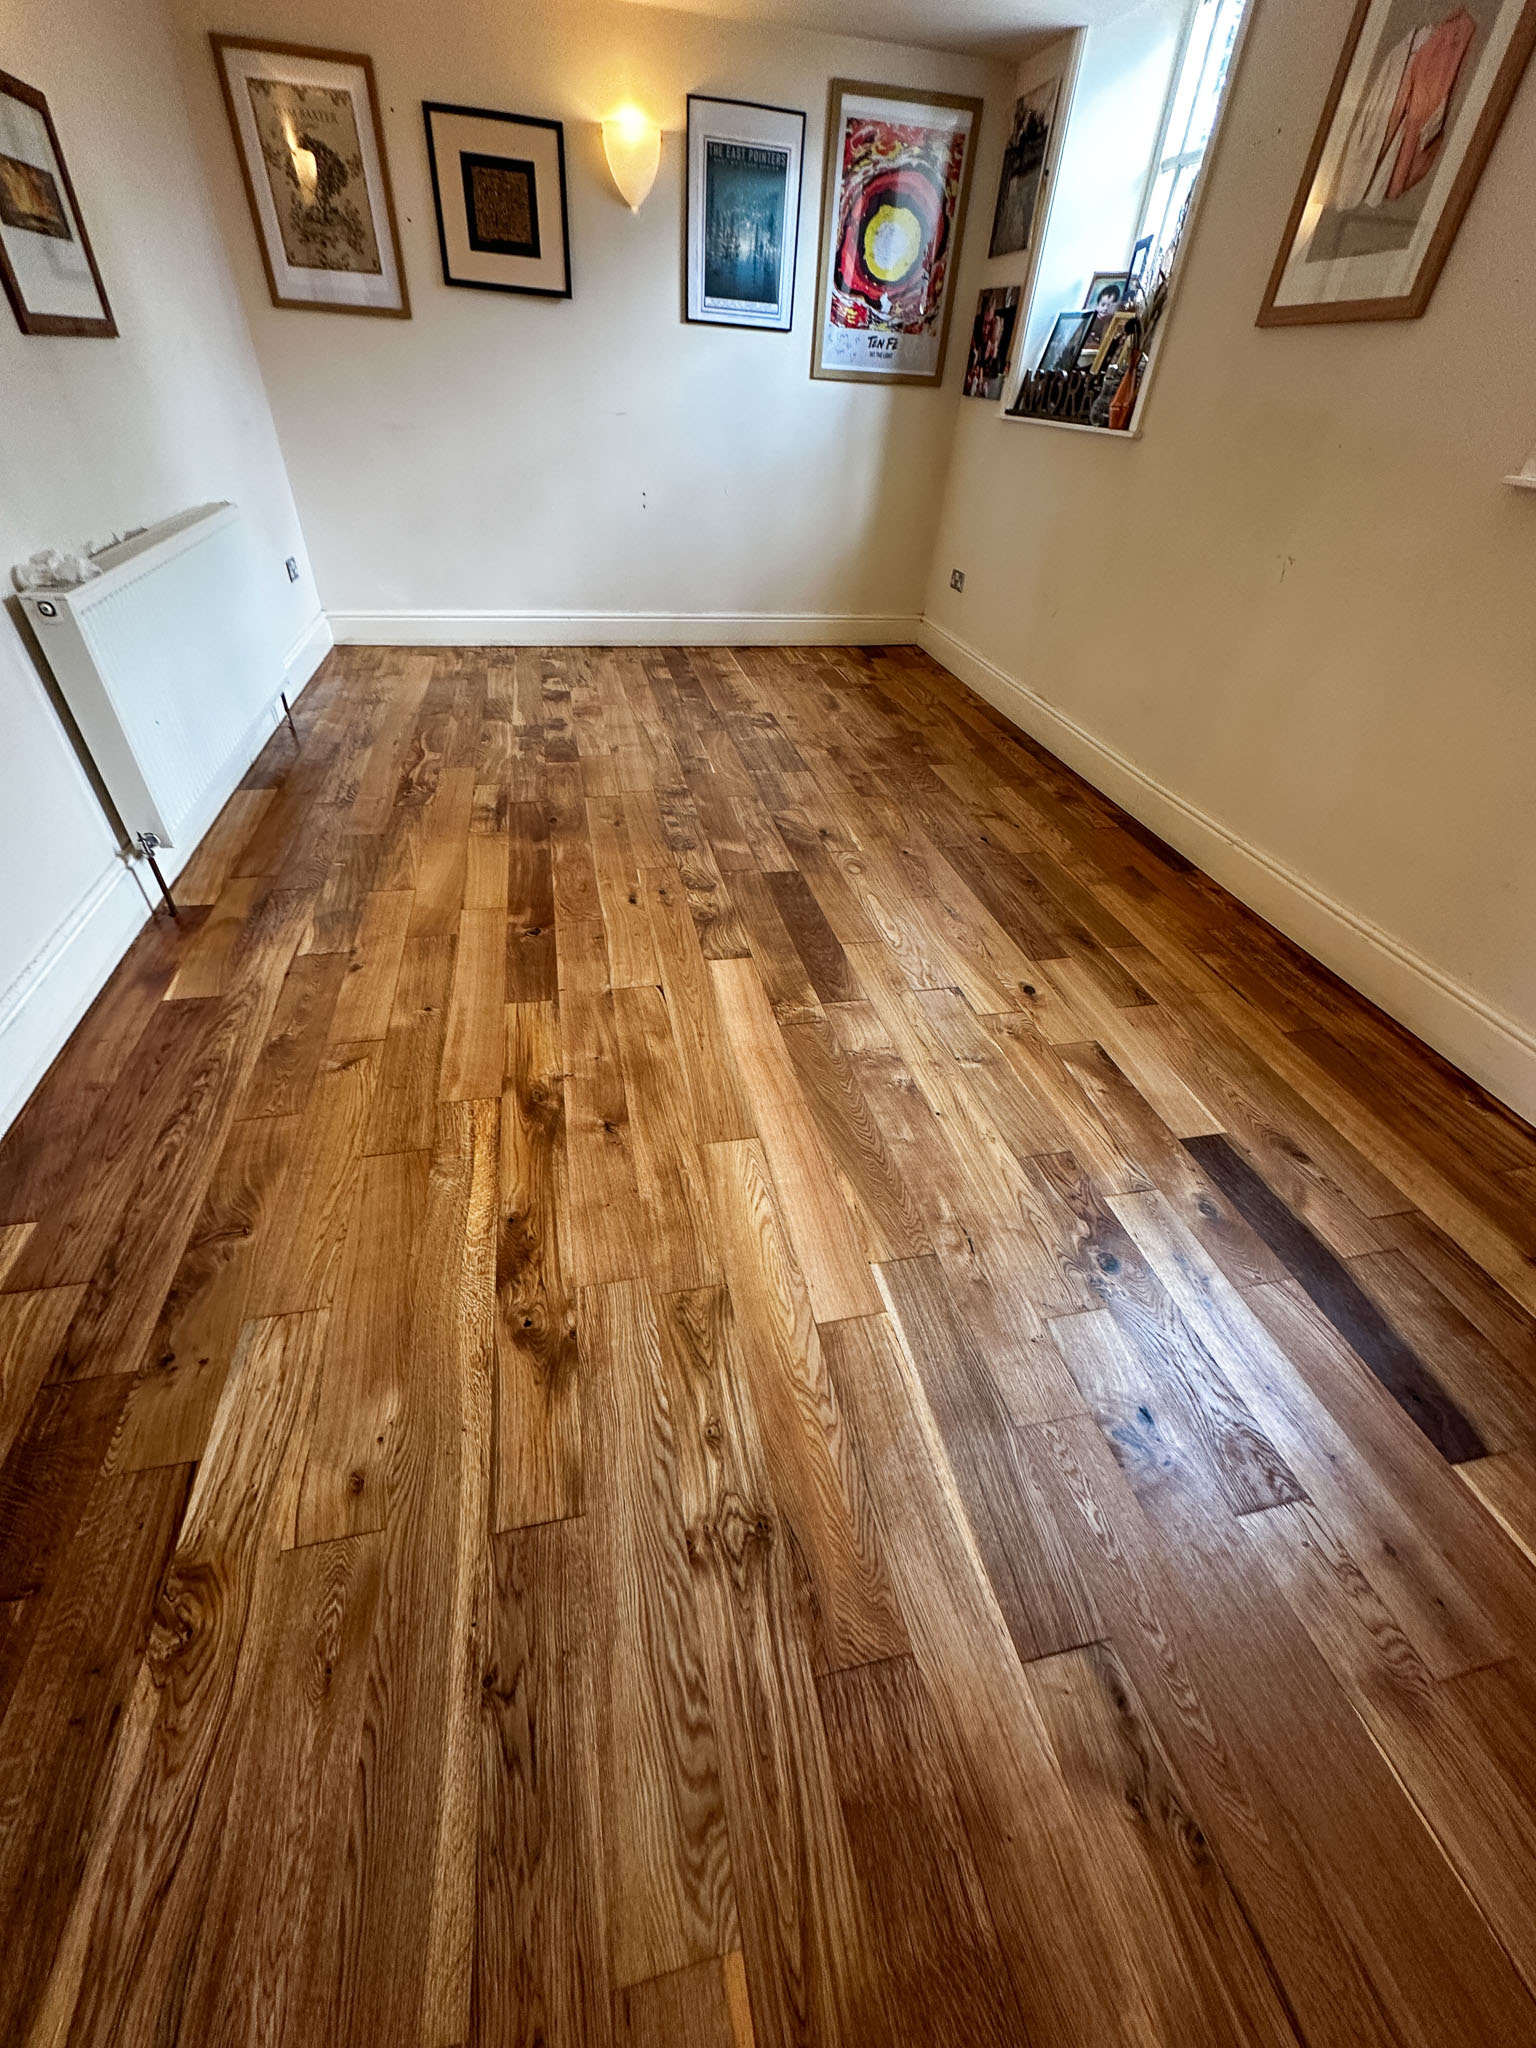 Floor sanding and restoration of a solid oak floor in North Yorkshire